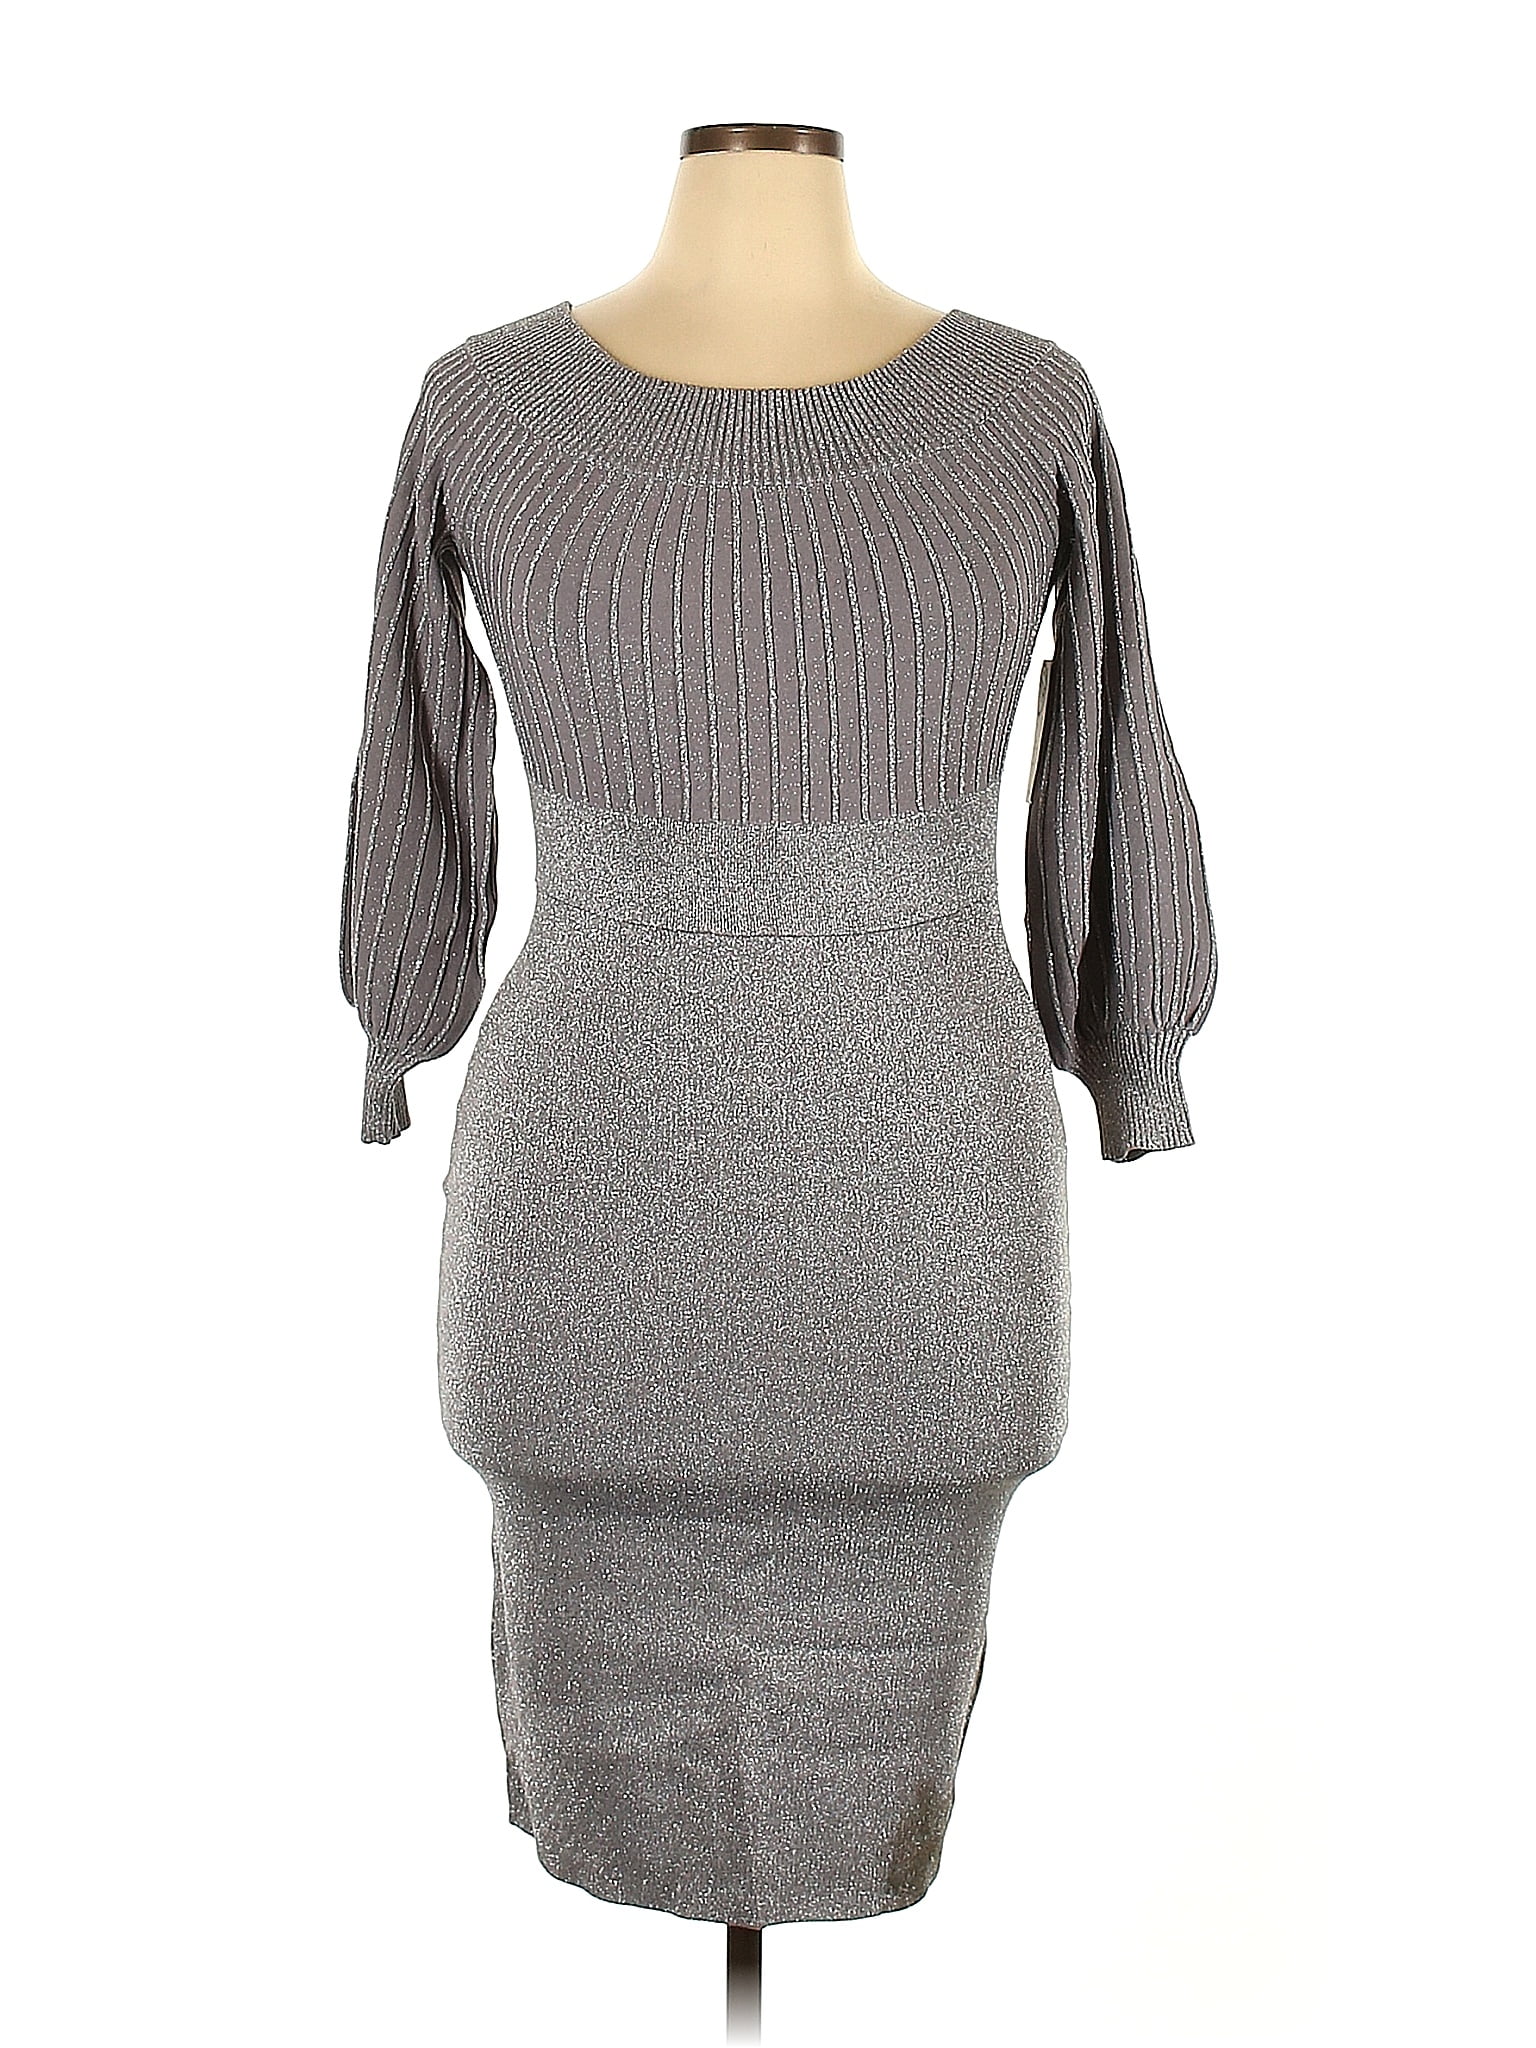 FASHION TO FIGURE Gray Casual Dress Size 0X Plus (0) (Plus) - 65% off ...